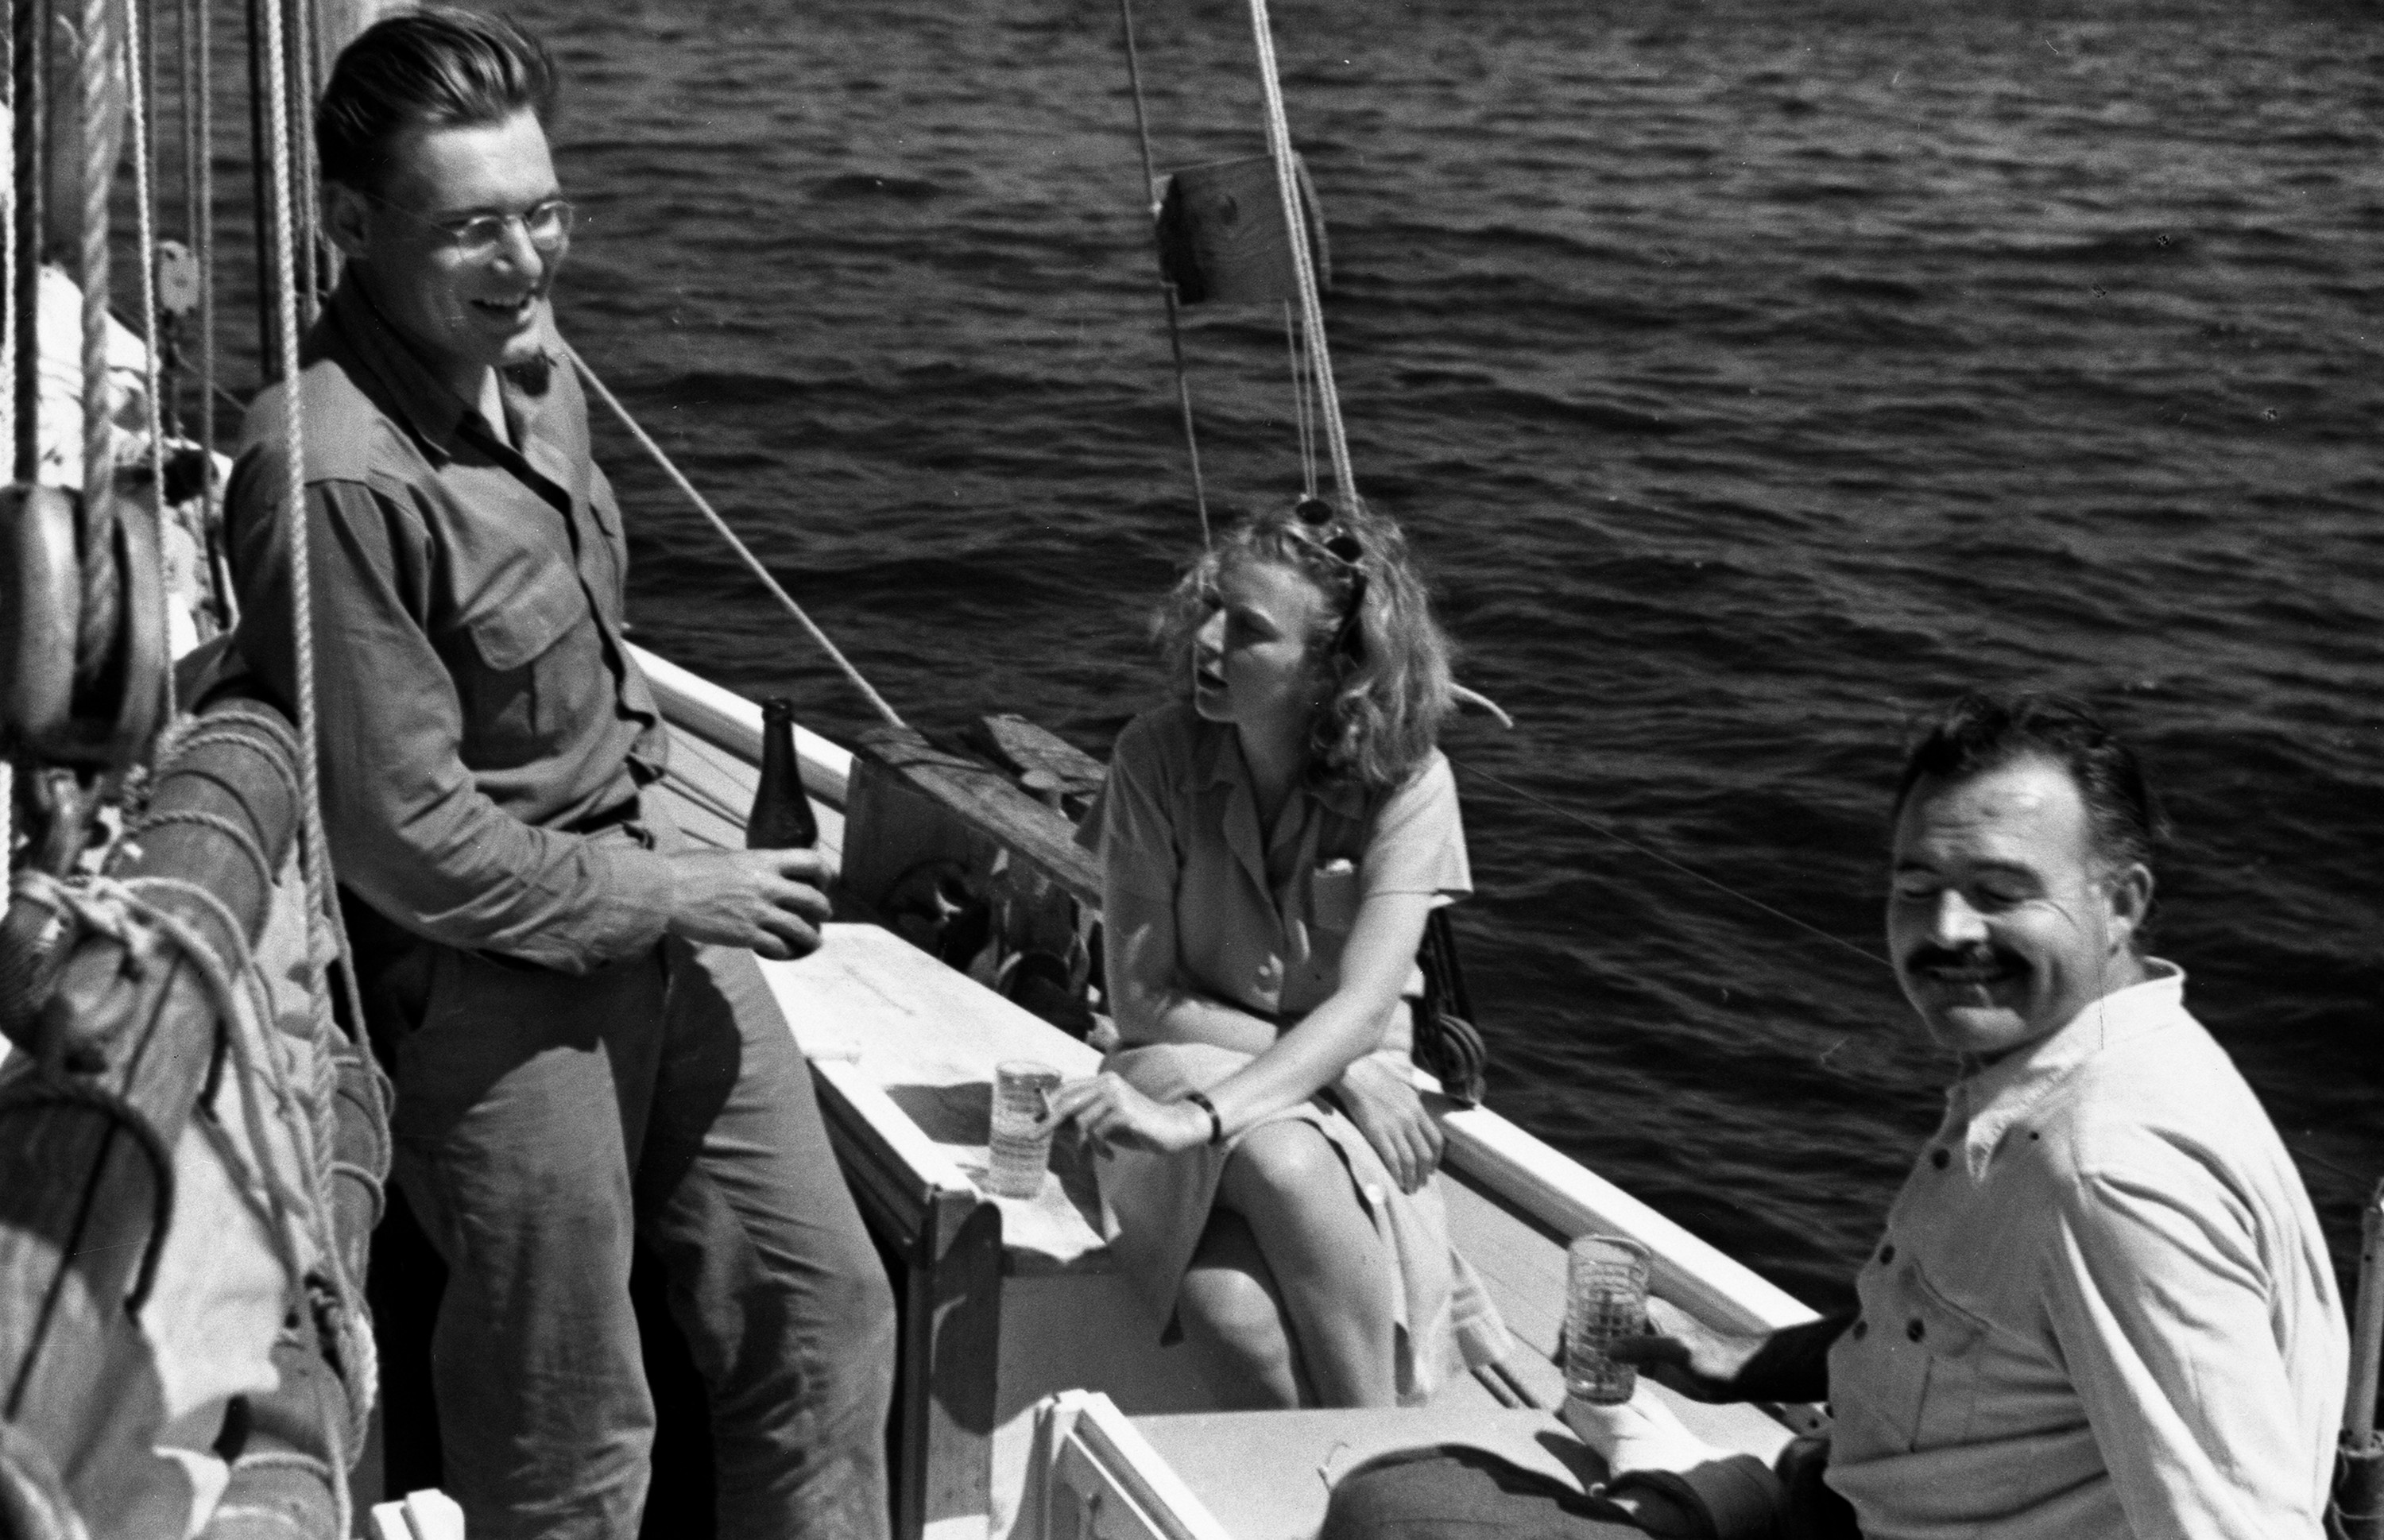 Leicester Hemingway, Martha Gellhorn, and Ernest Hemingway relaxing on Leicester's sailboat, Havana, 1939.